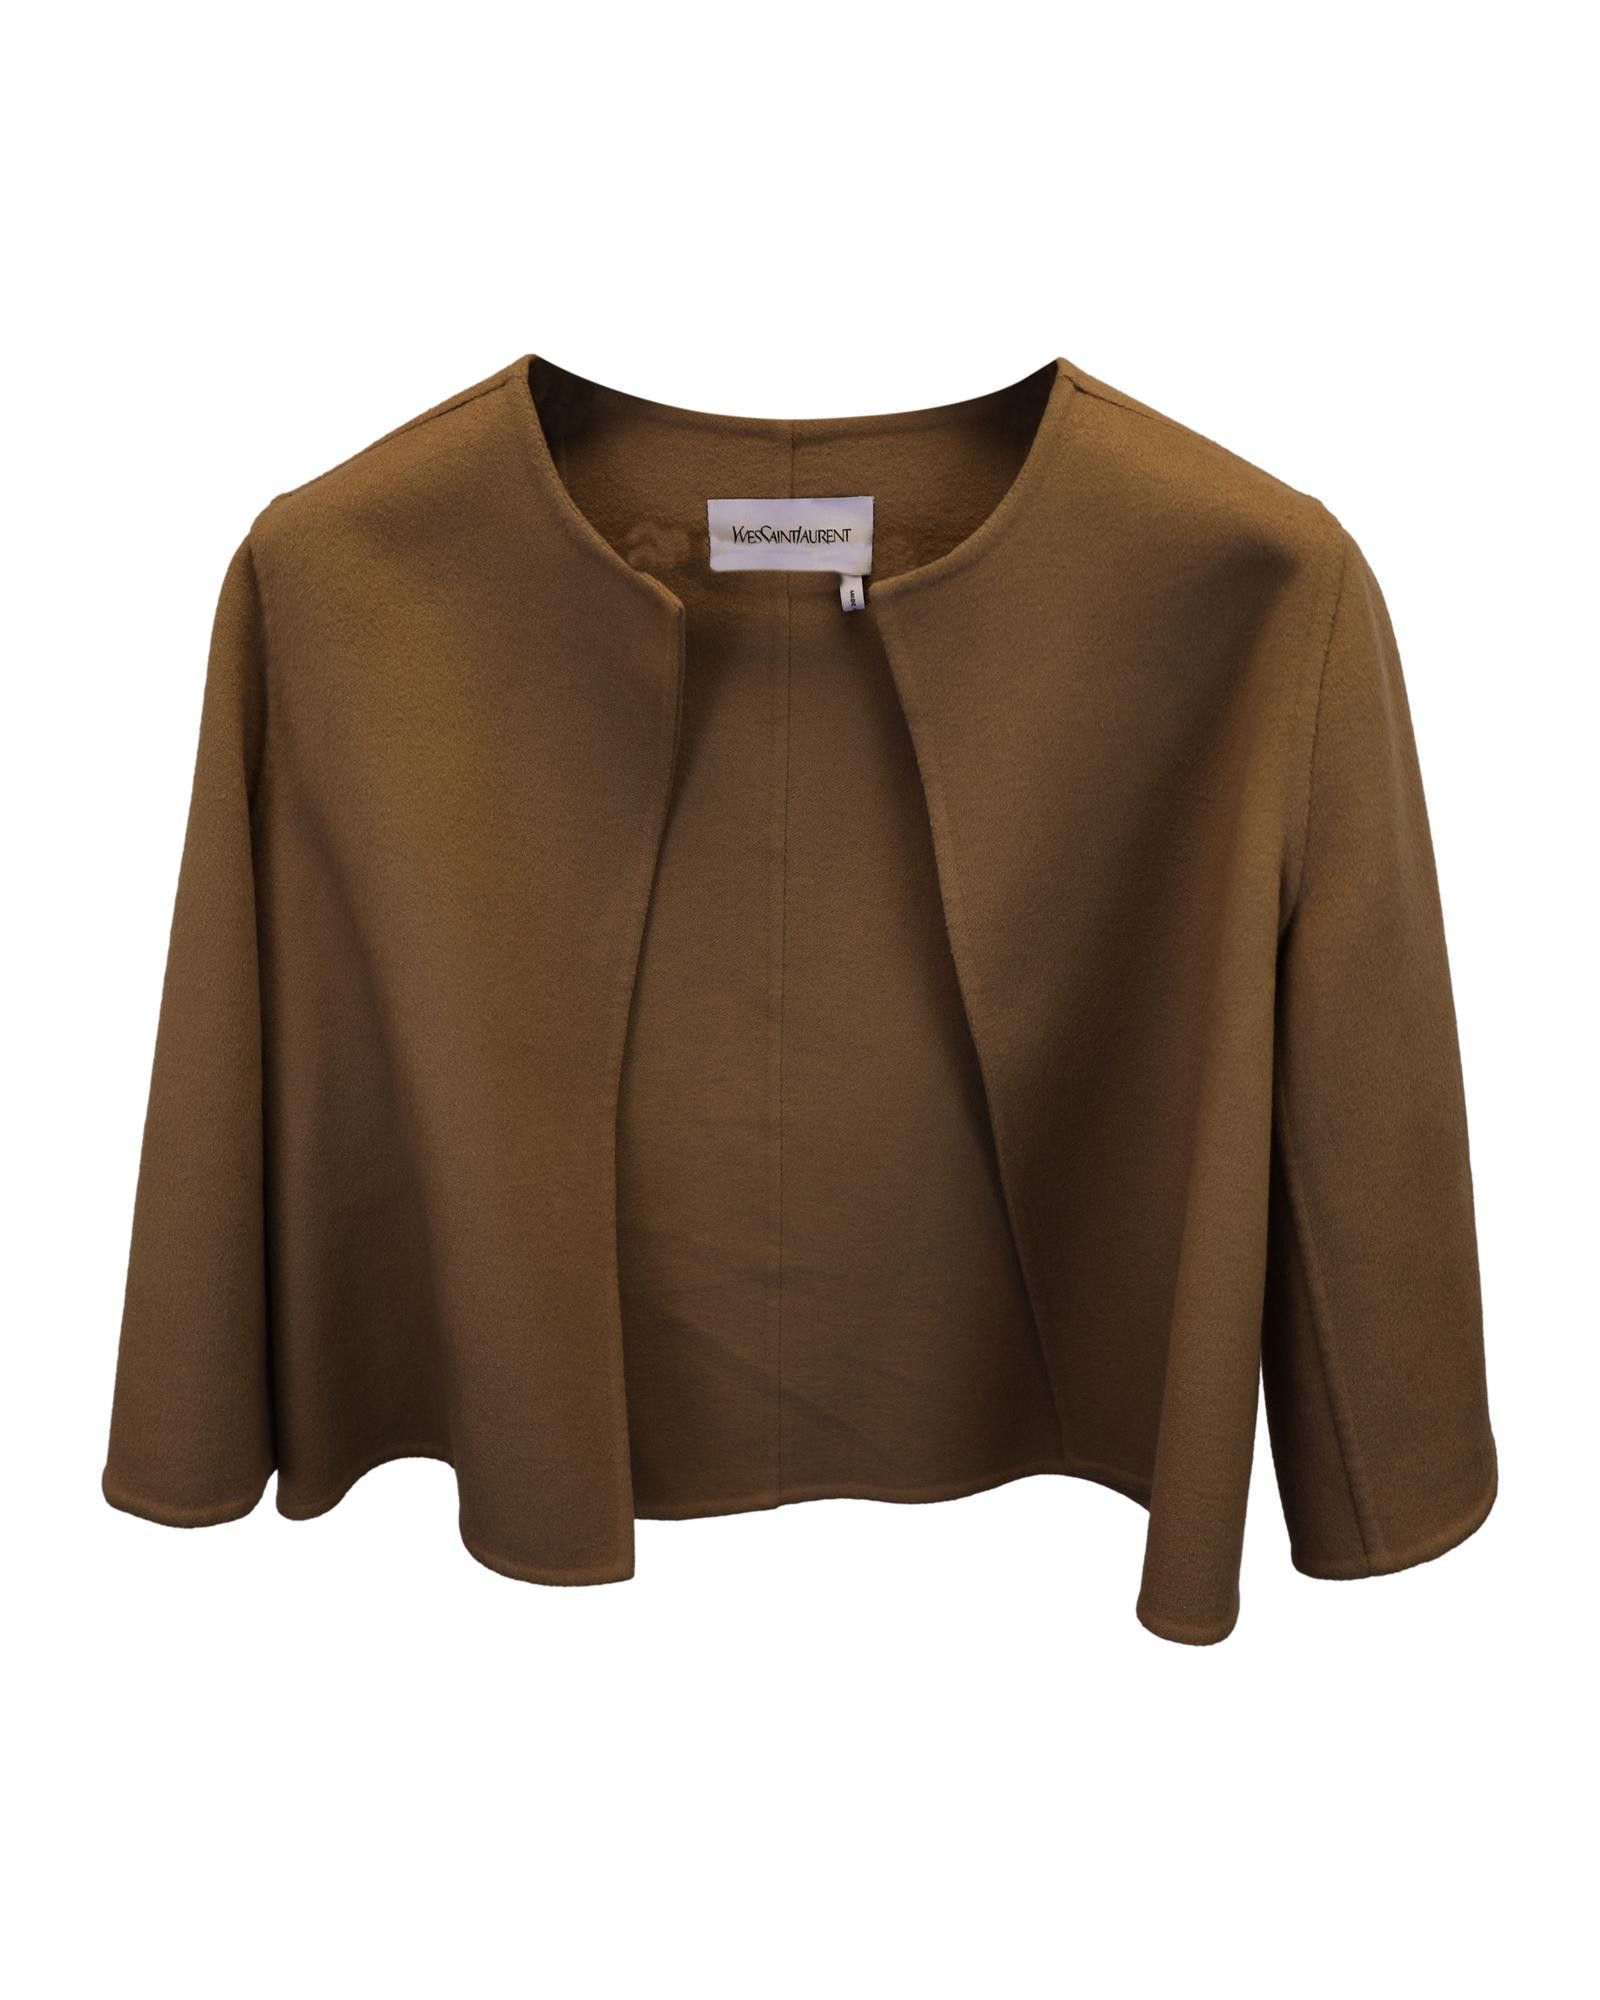 Yves Saint Laurent Luxurious Brown Cashmere Cropped Jacket by Saint Laurent Size S / US 4 / IT 40 - 1 Preview